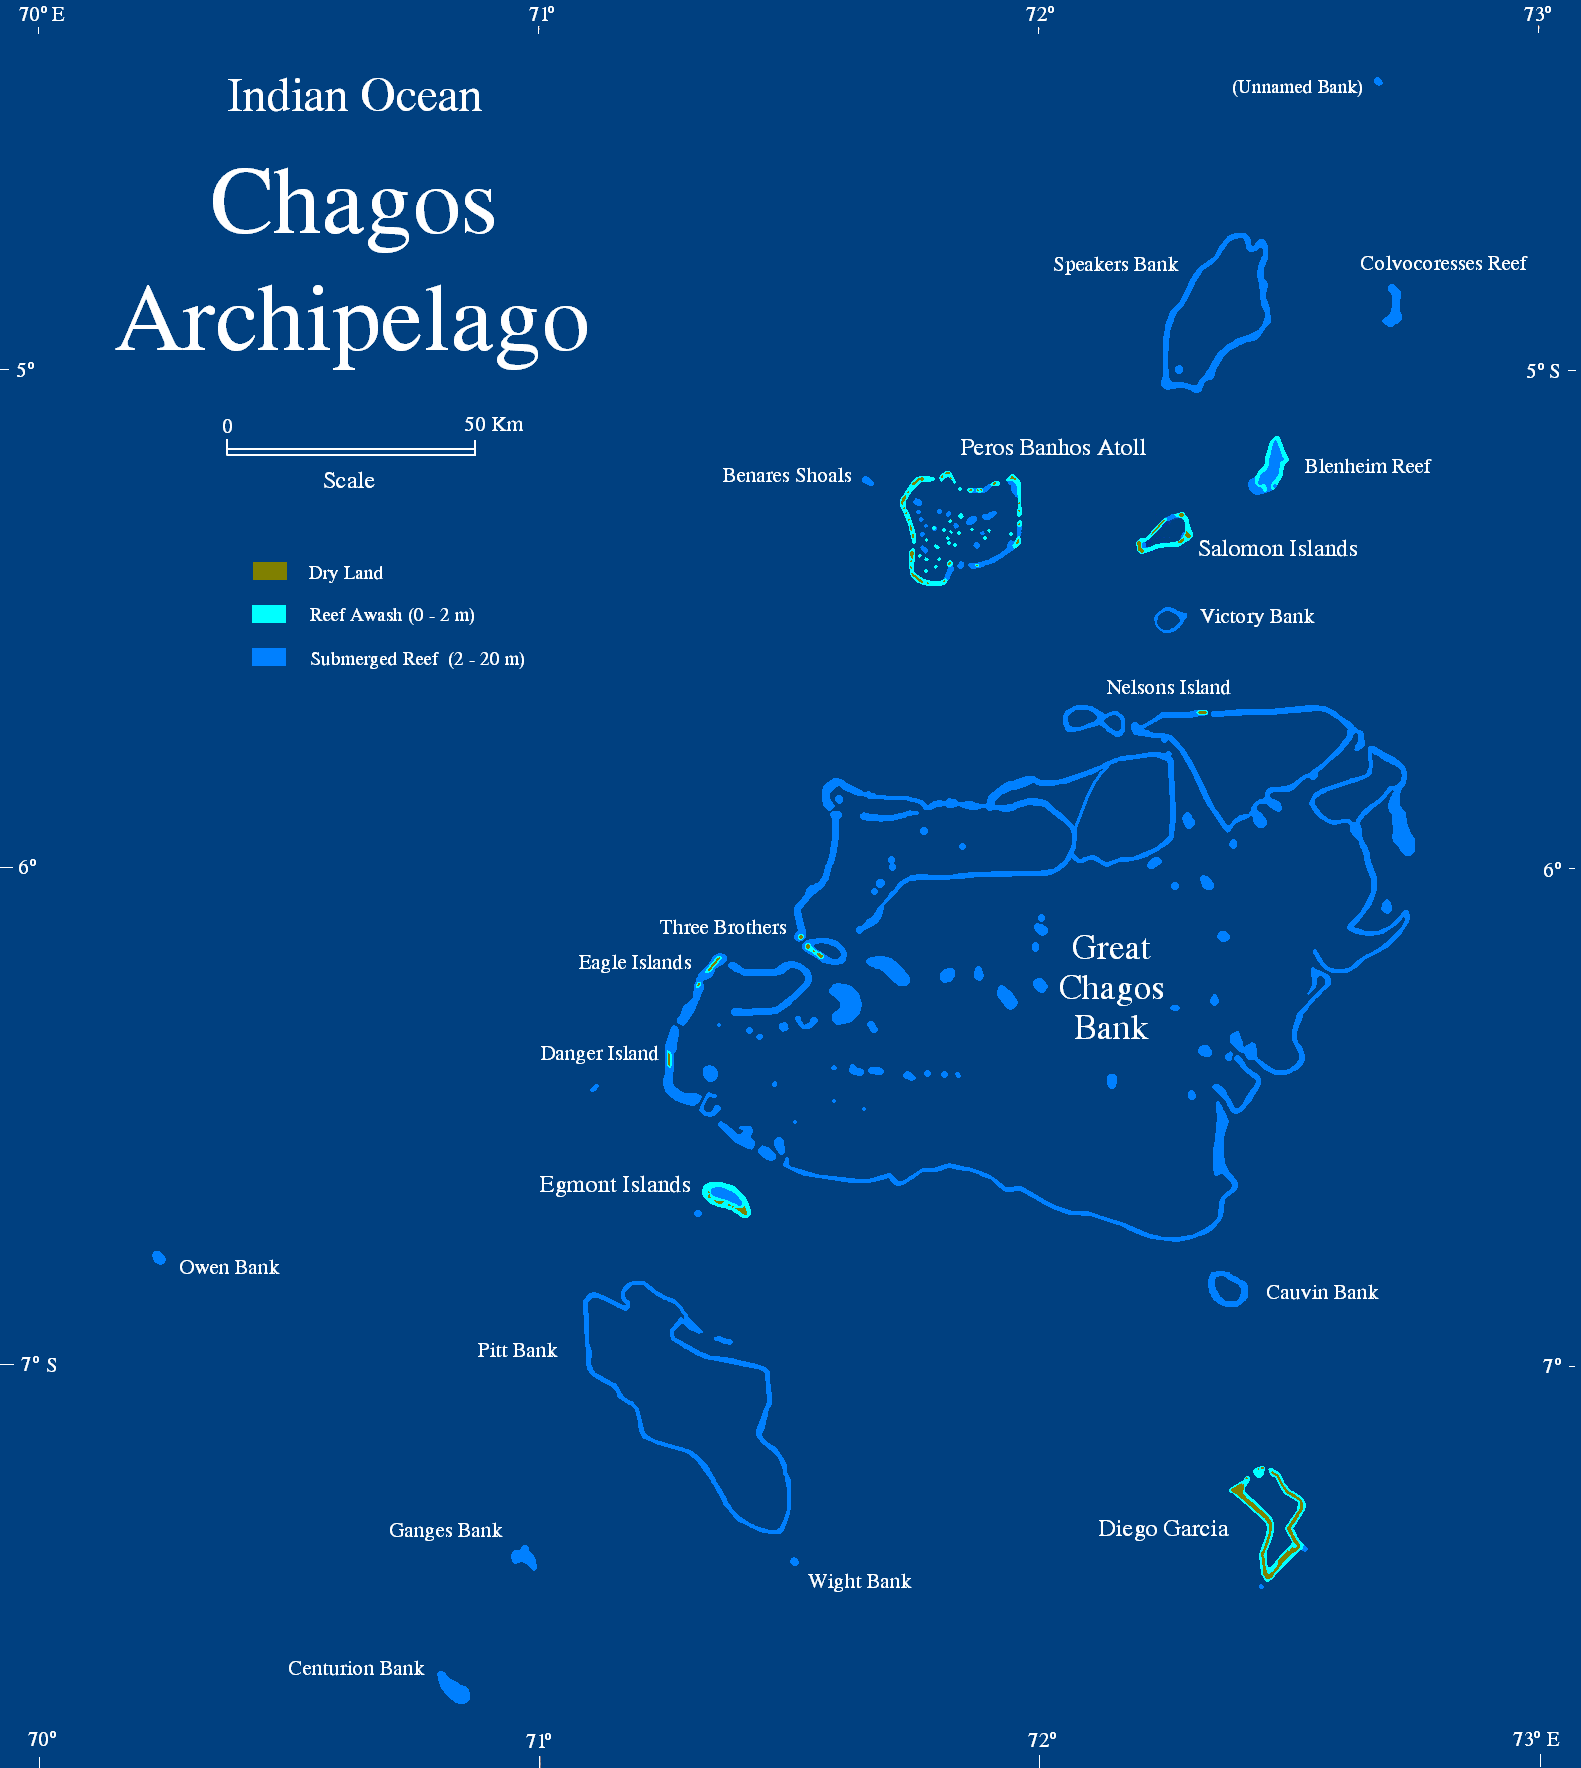 IASbaba's Mind Map Chagos Archipelago - Issue, 24th January